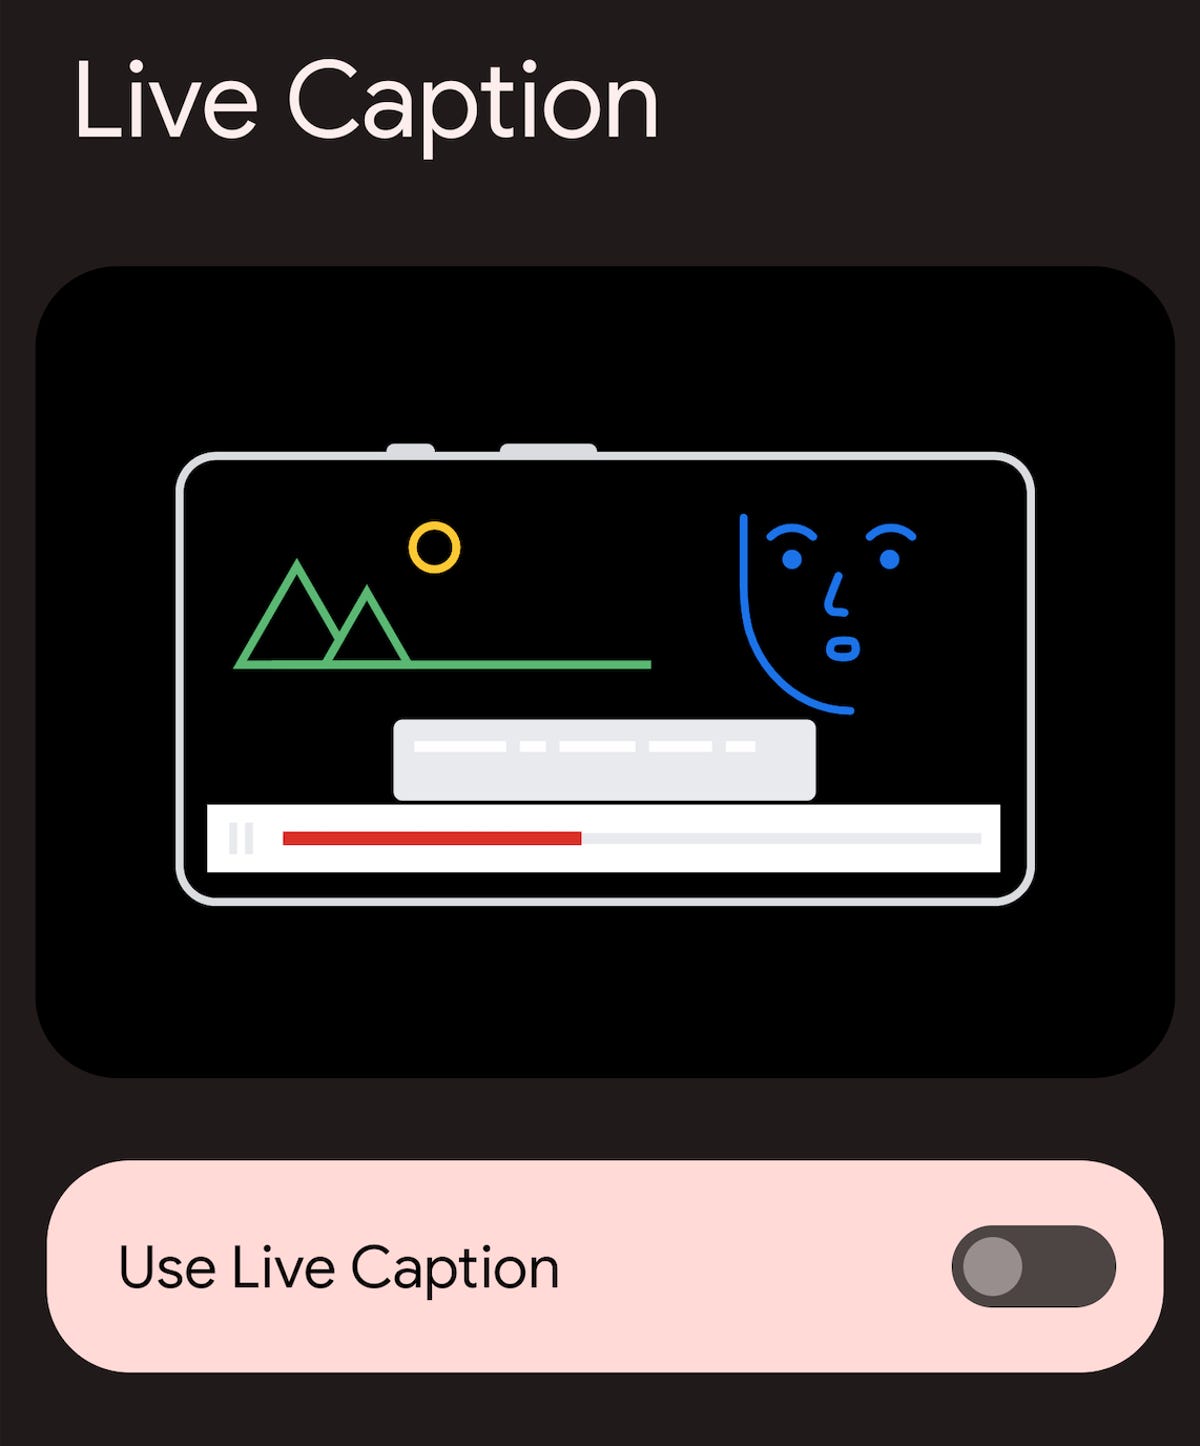 A screenshot of the Pixel's "Live Caption" setting